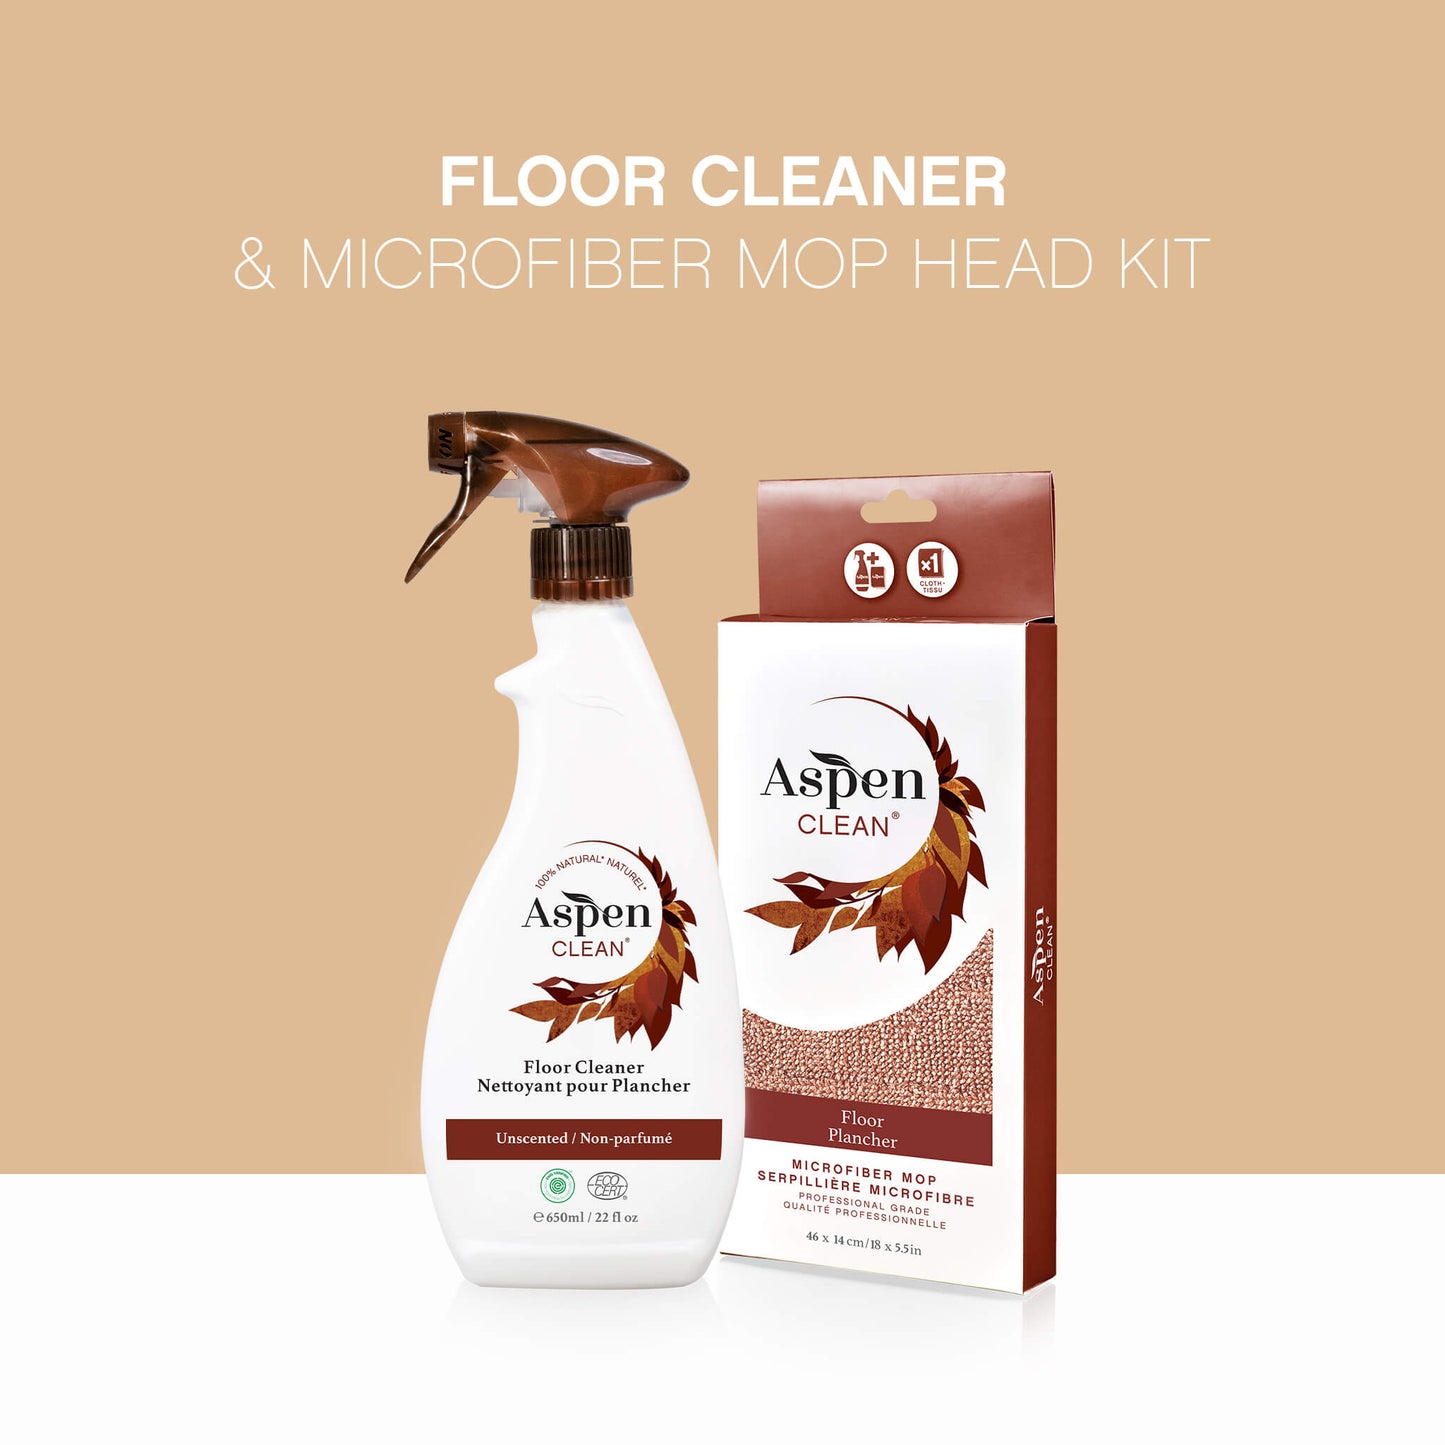 Floor Cleaner and Microfiber Mop Head Kit